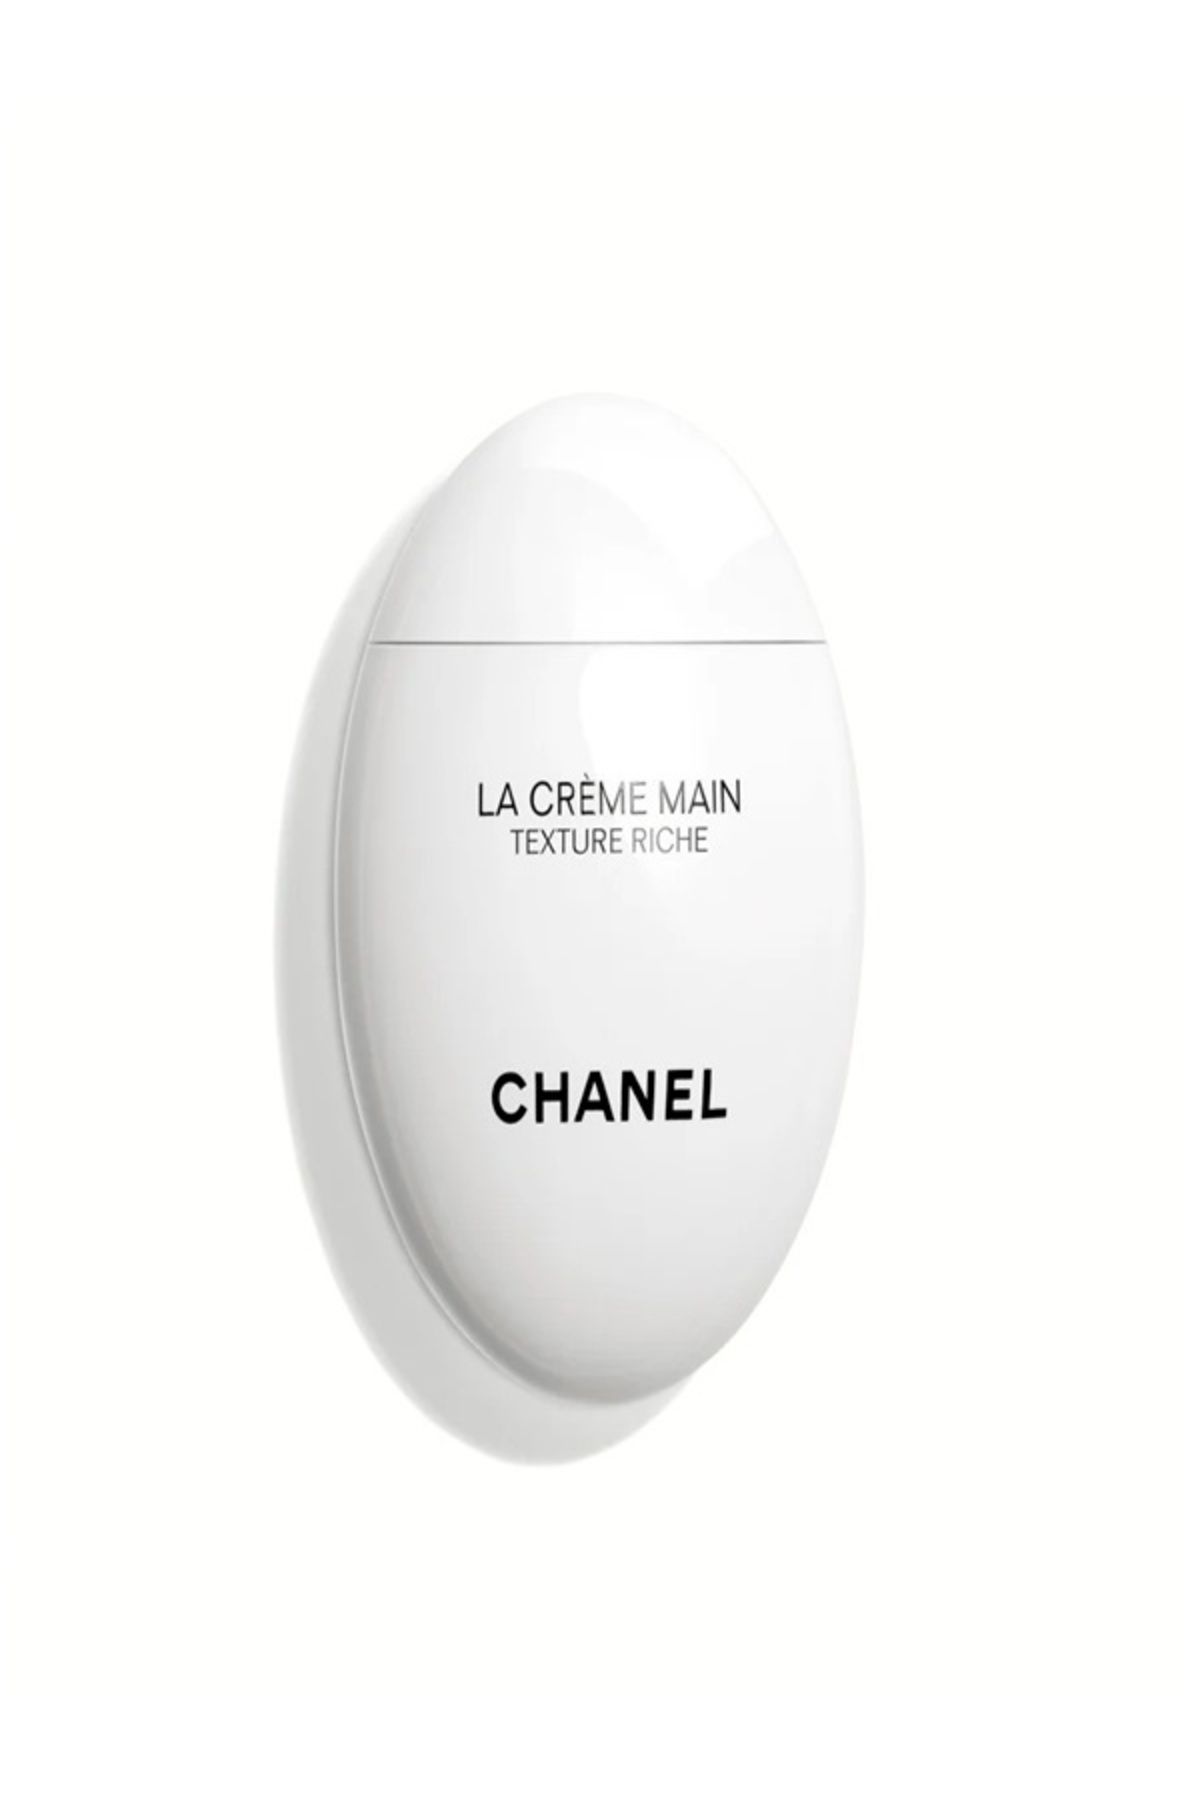 Chanel LA CRÈME MAIN TEXTURE RICHE BESLER-KORUR-AYDINLATIR-50 ml